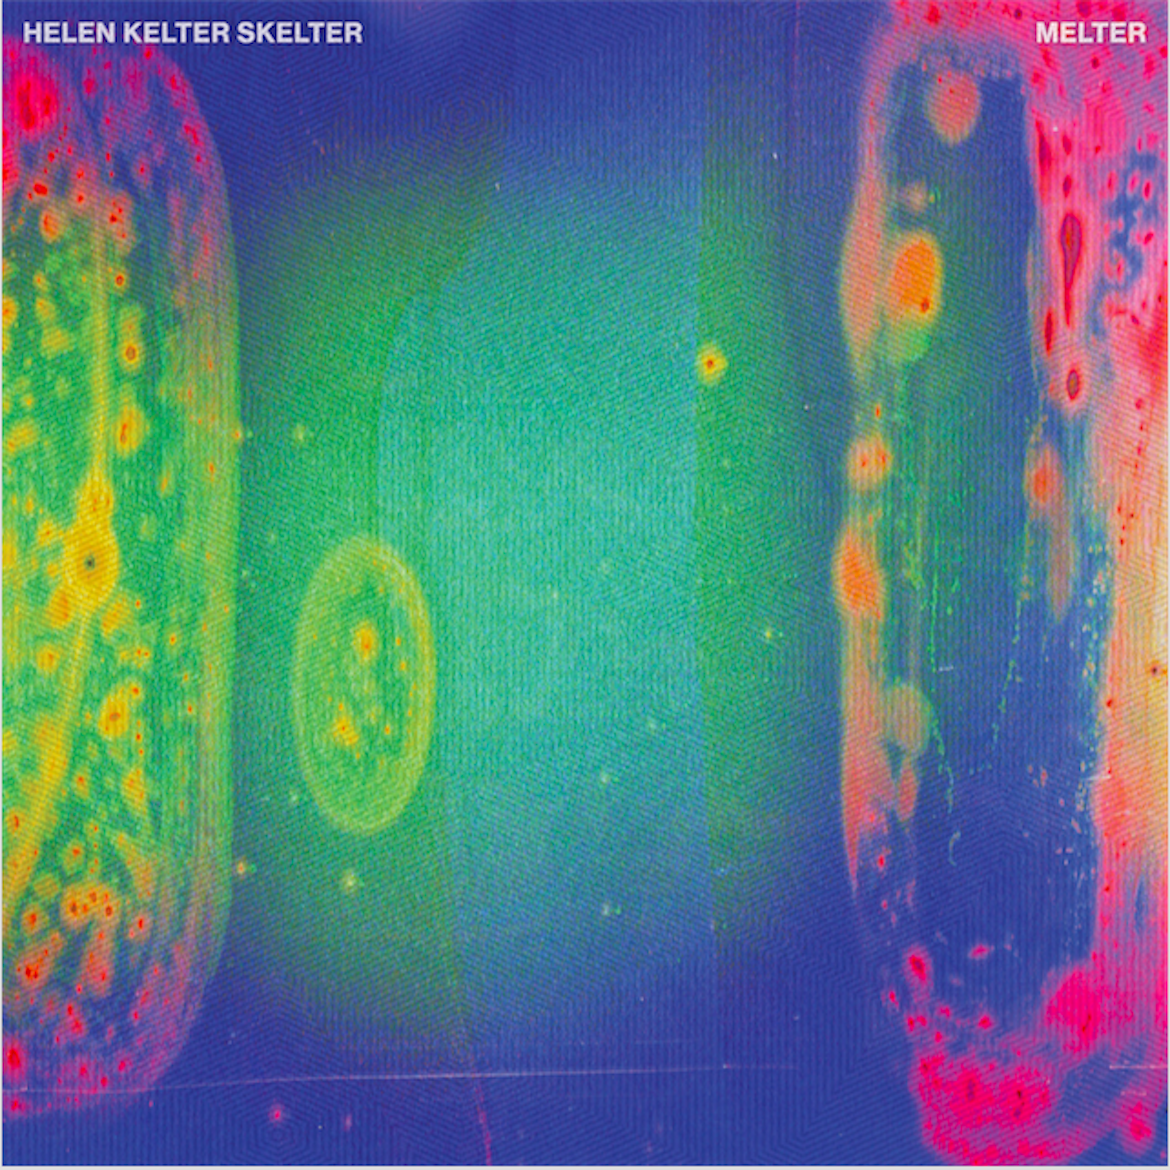 Melter Album Cover by Helen Kelter Skelter